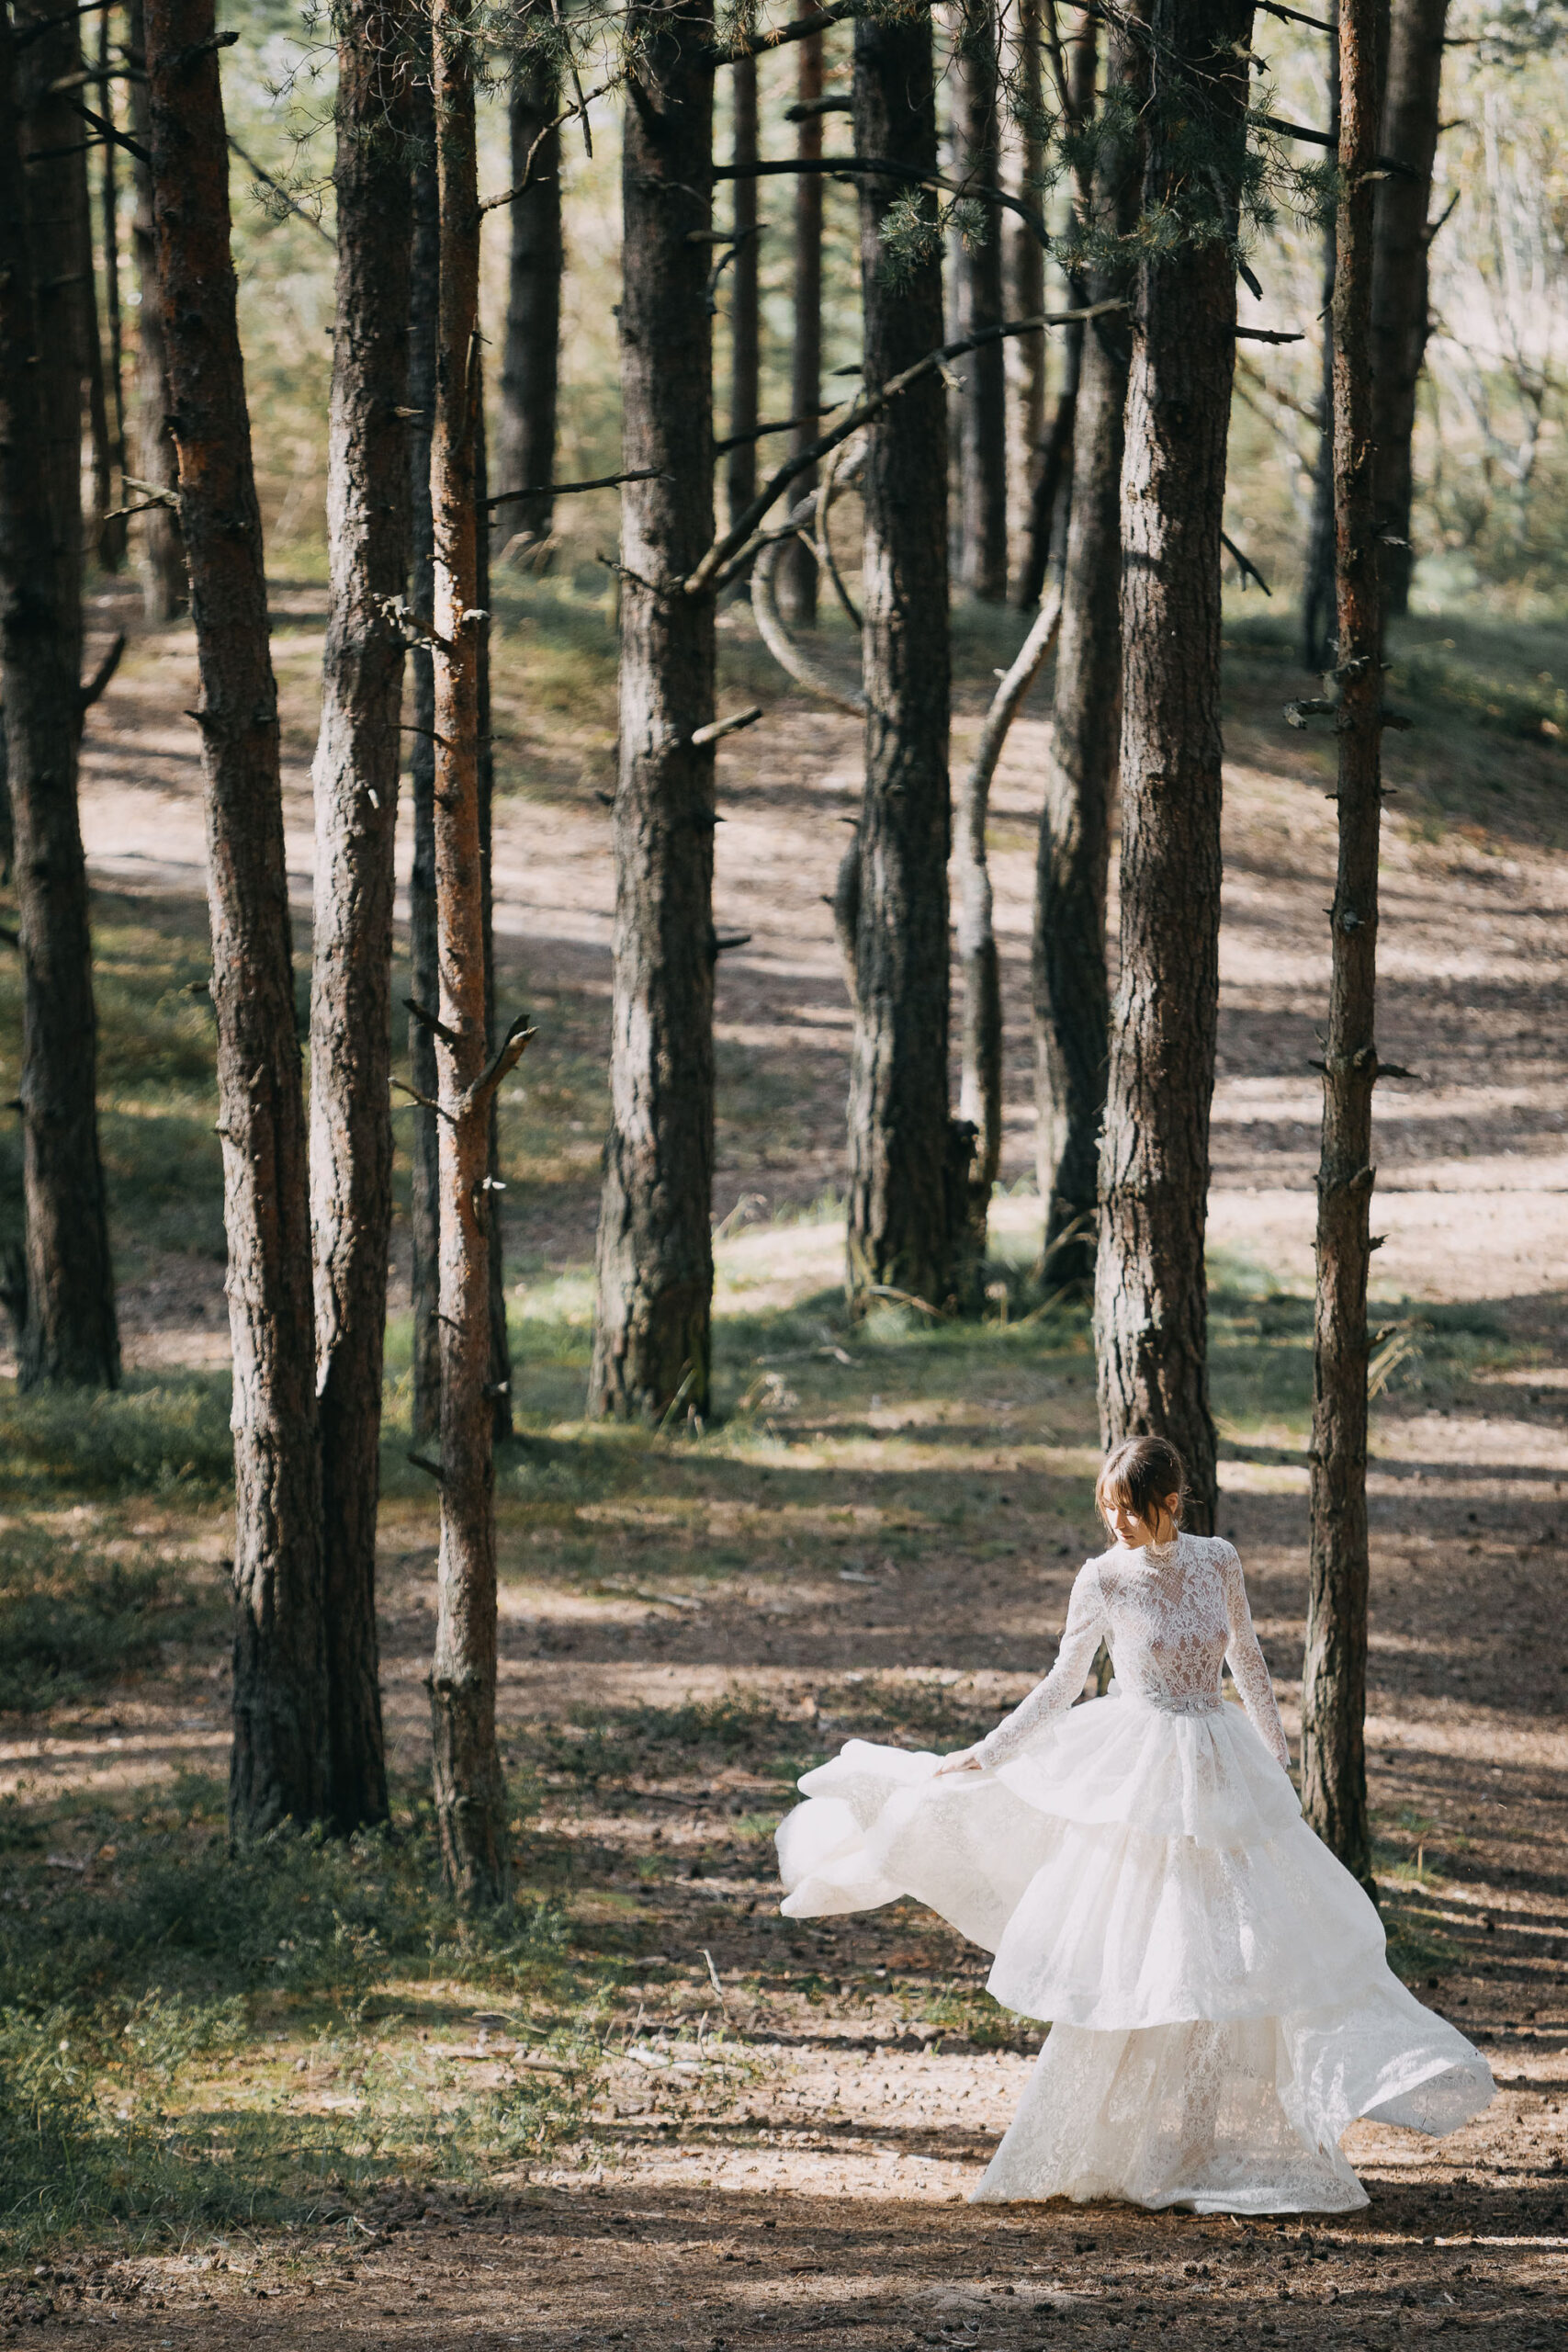 Evermore: a beautiful new bridal collection from Katya Katya London